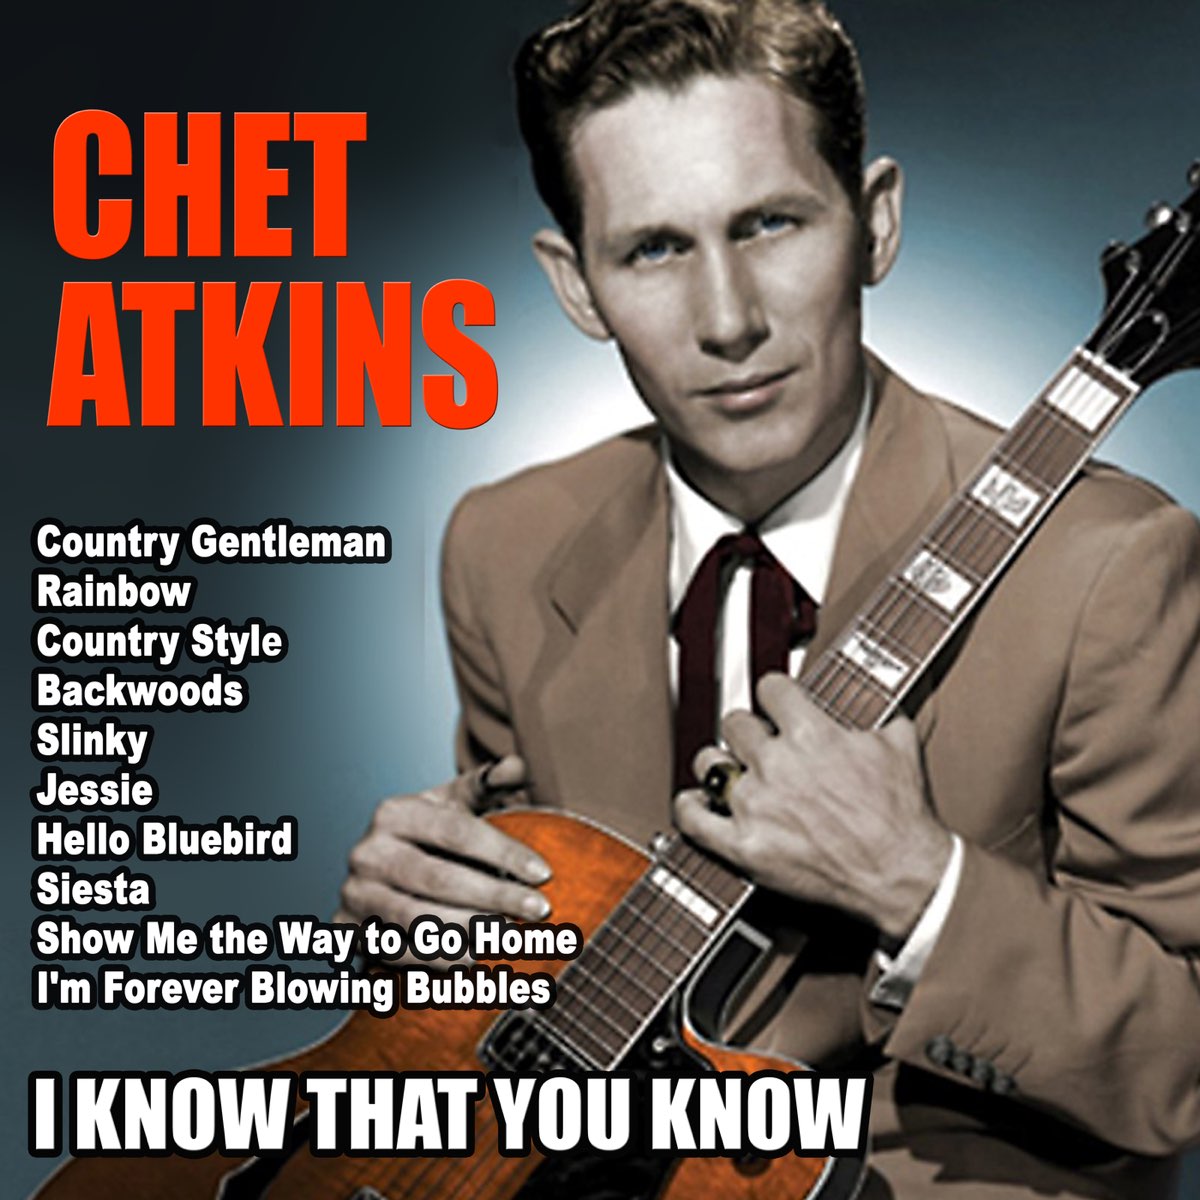 Слушать музыку джентльмен. Chet Atkins. Gibson chet Atkins Country Gentleman. Chet Atkins фото сидящий. Chet Atkins man of Mystery.